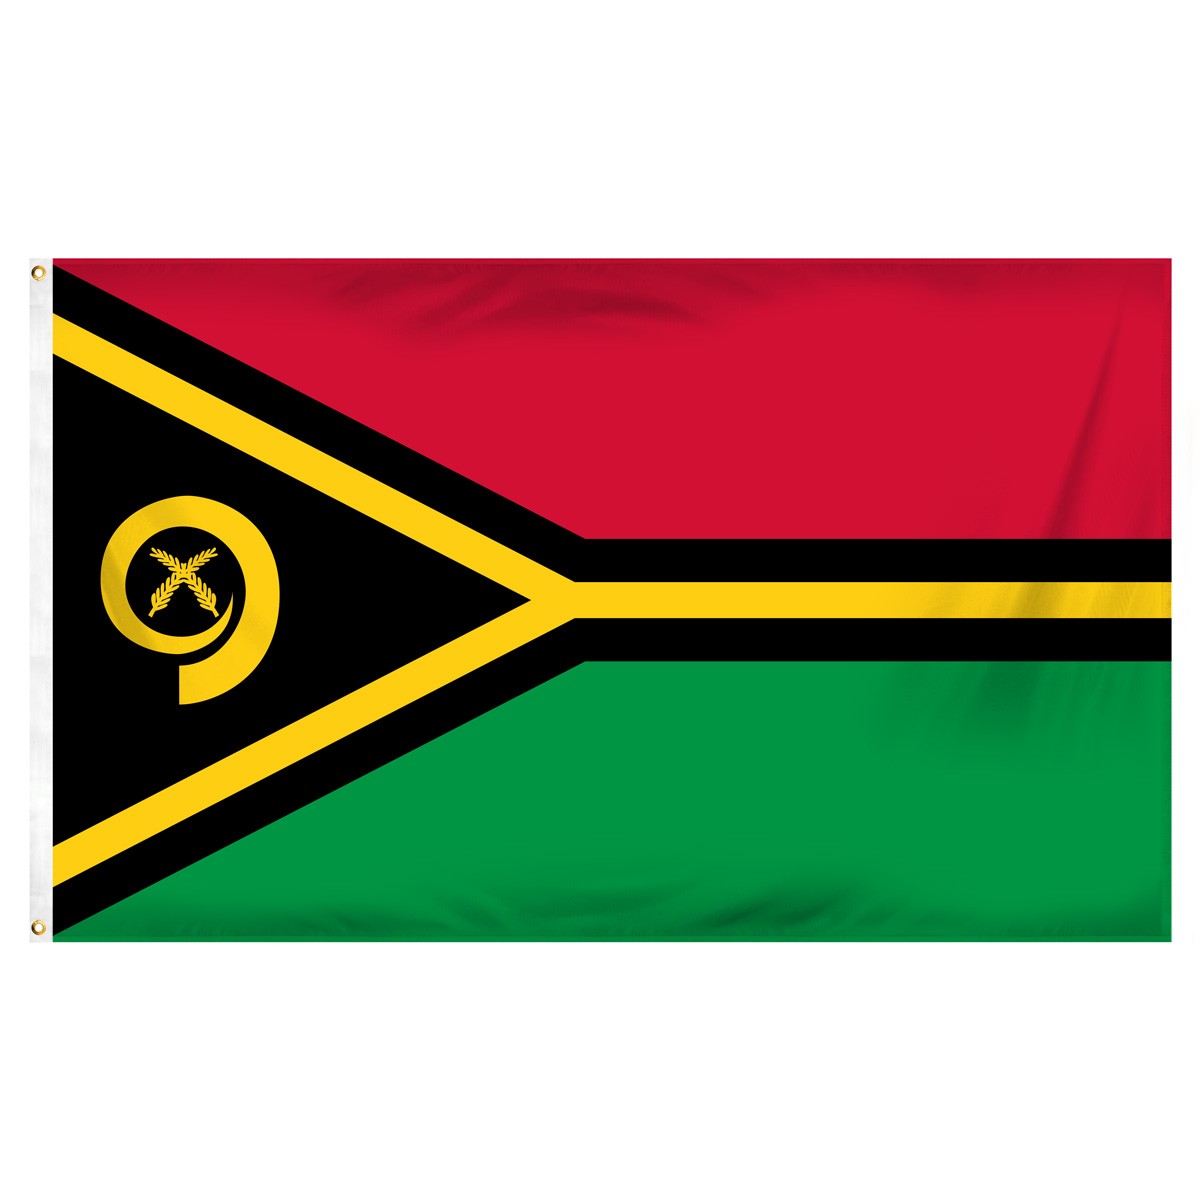 Vanuatu Rope Pennants and Flags